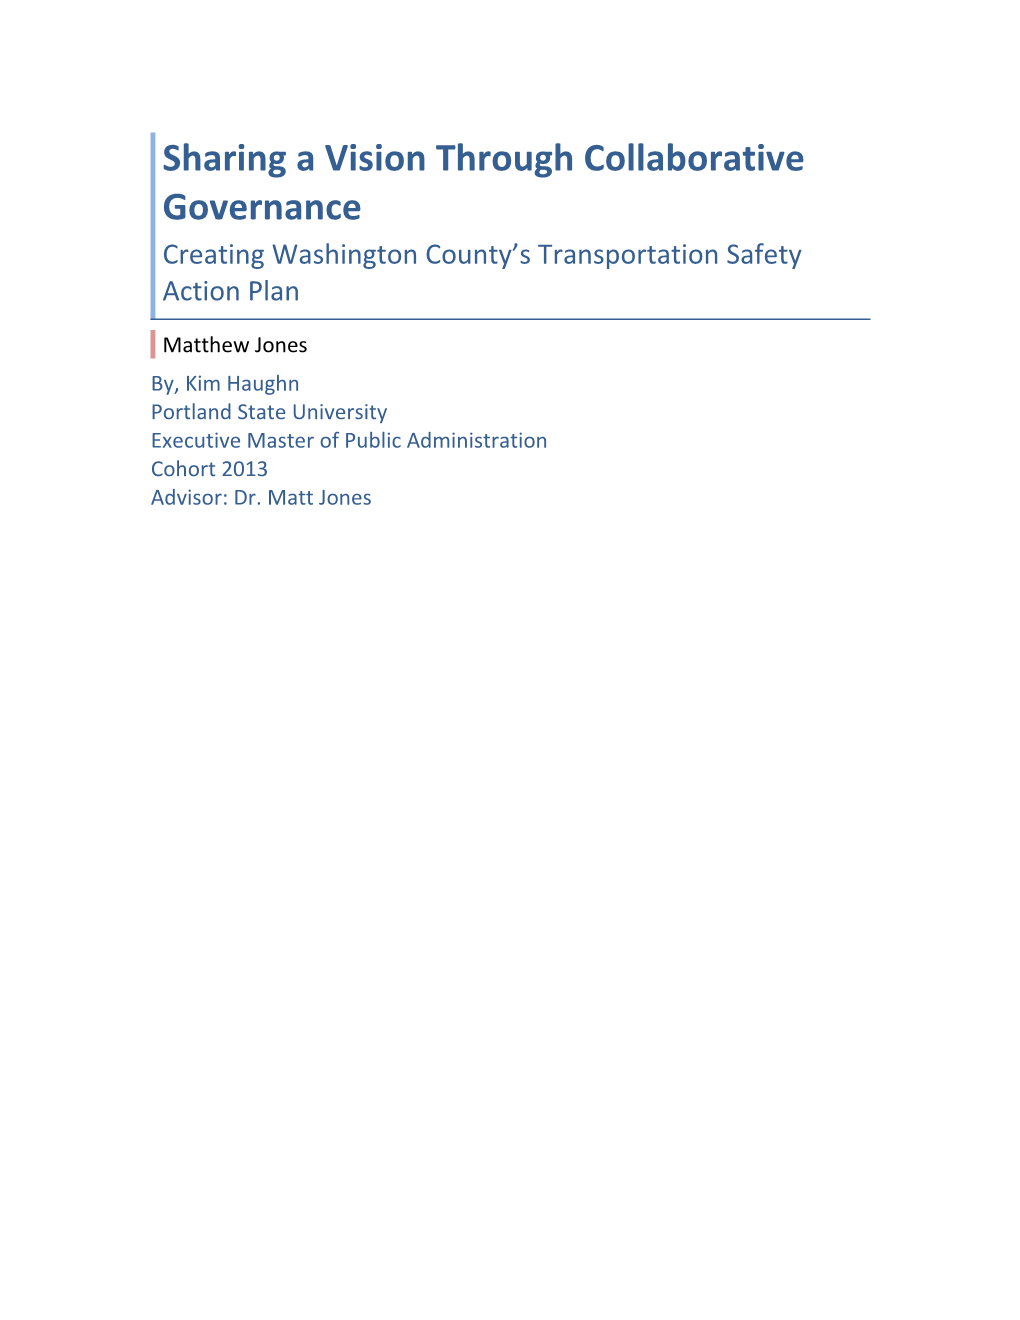 Sharing a Vision Through Collaborative Governance